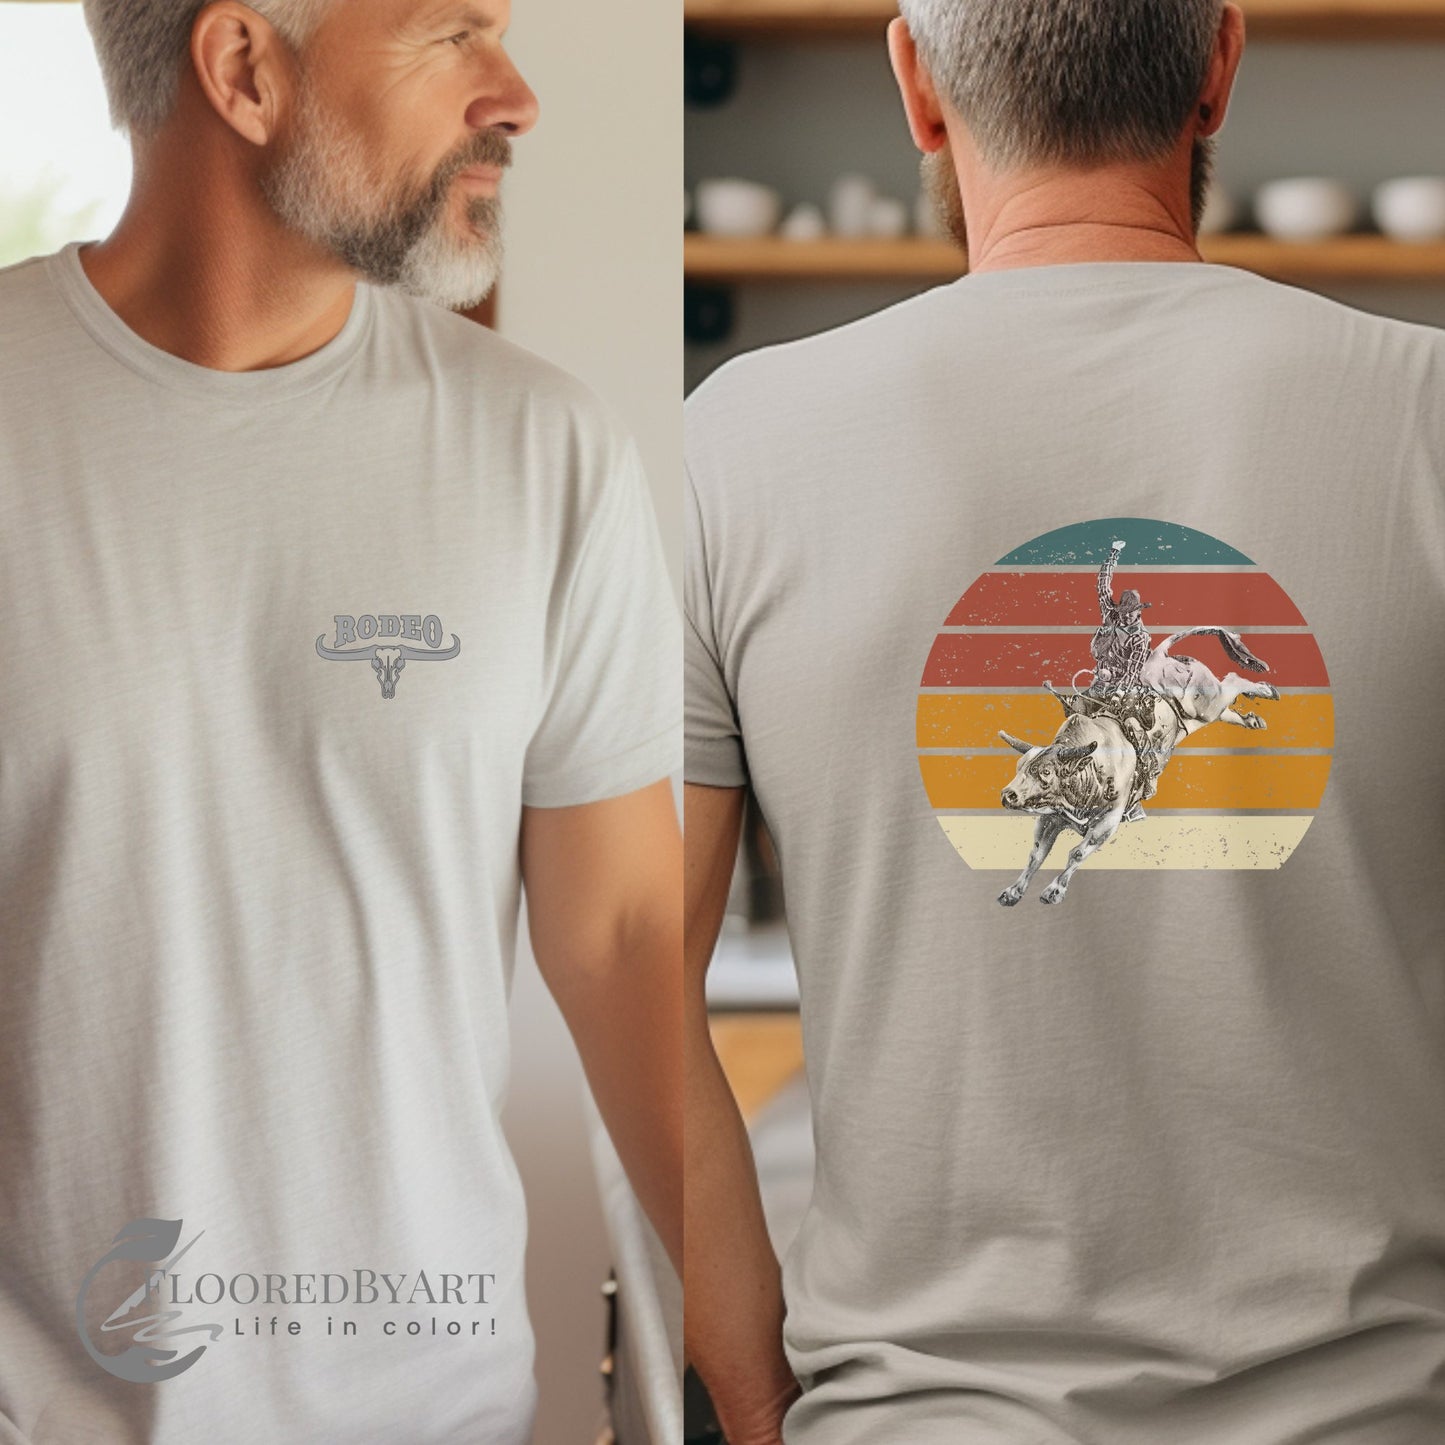 Rodeo Bull Rider 2 sided T-shirt, Rodeo Cowboy Shirt - FlooredByArt